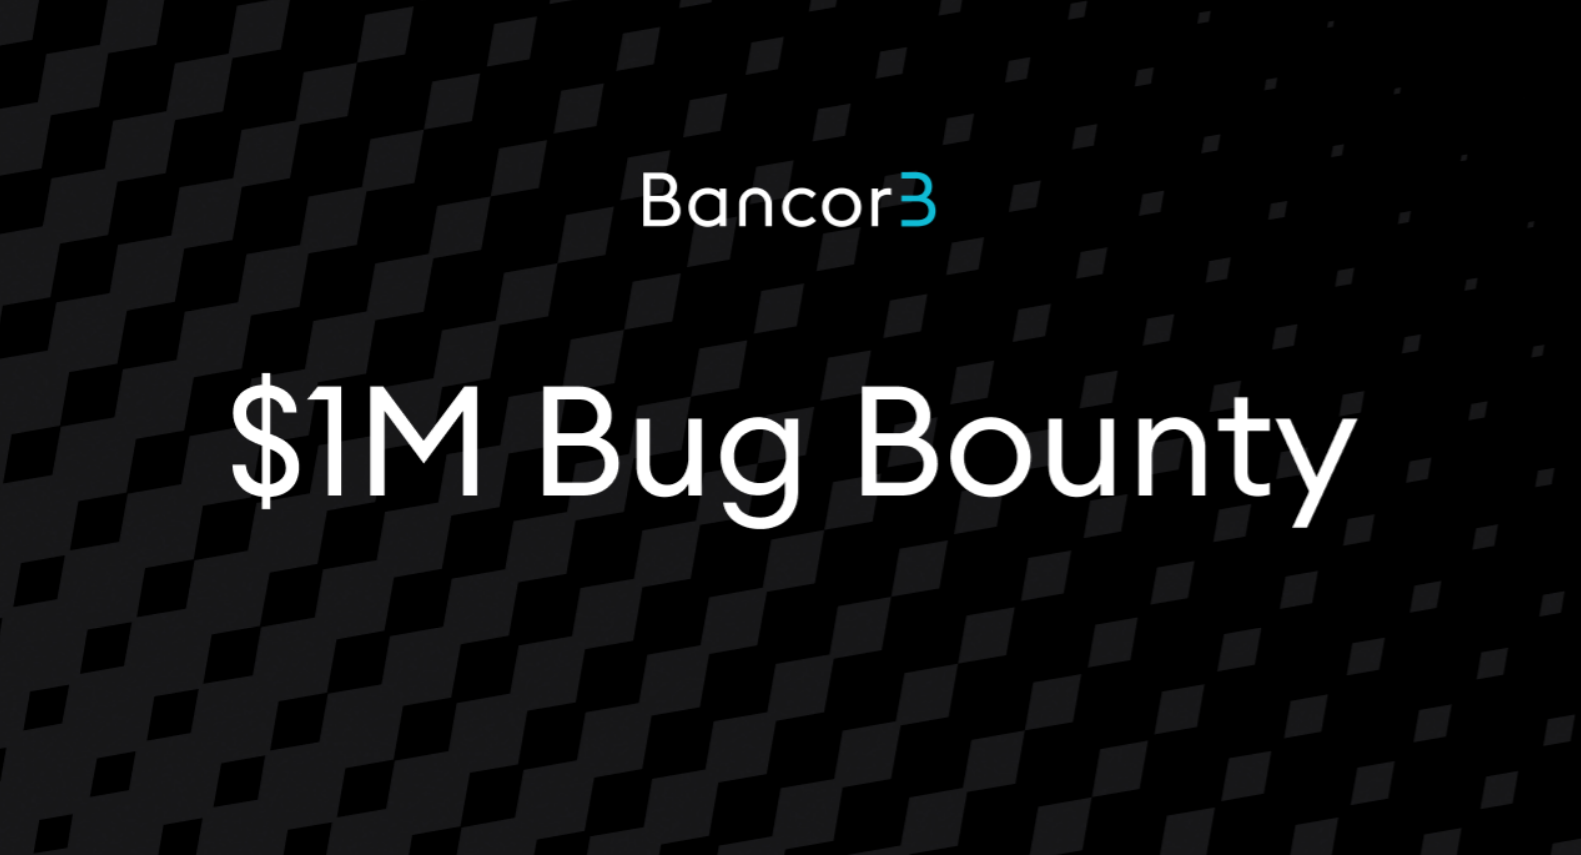 Bancor 3 Bug Bounty Event With $1 Million Reward